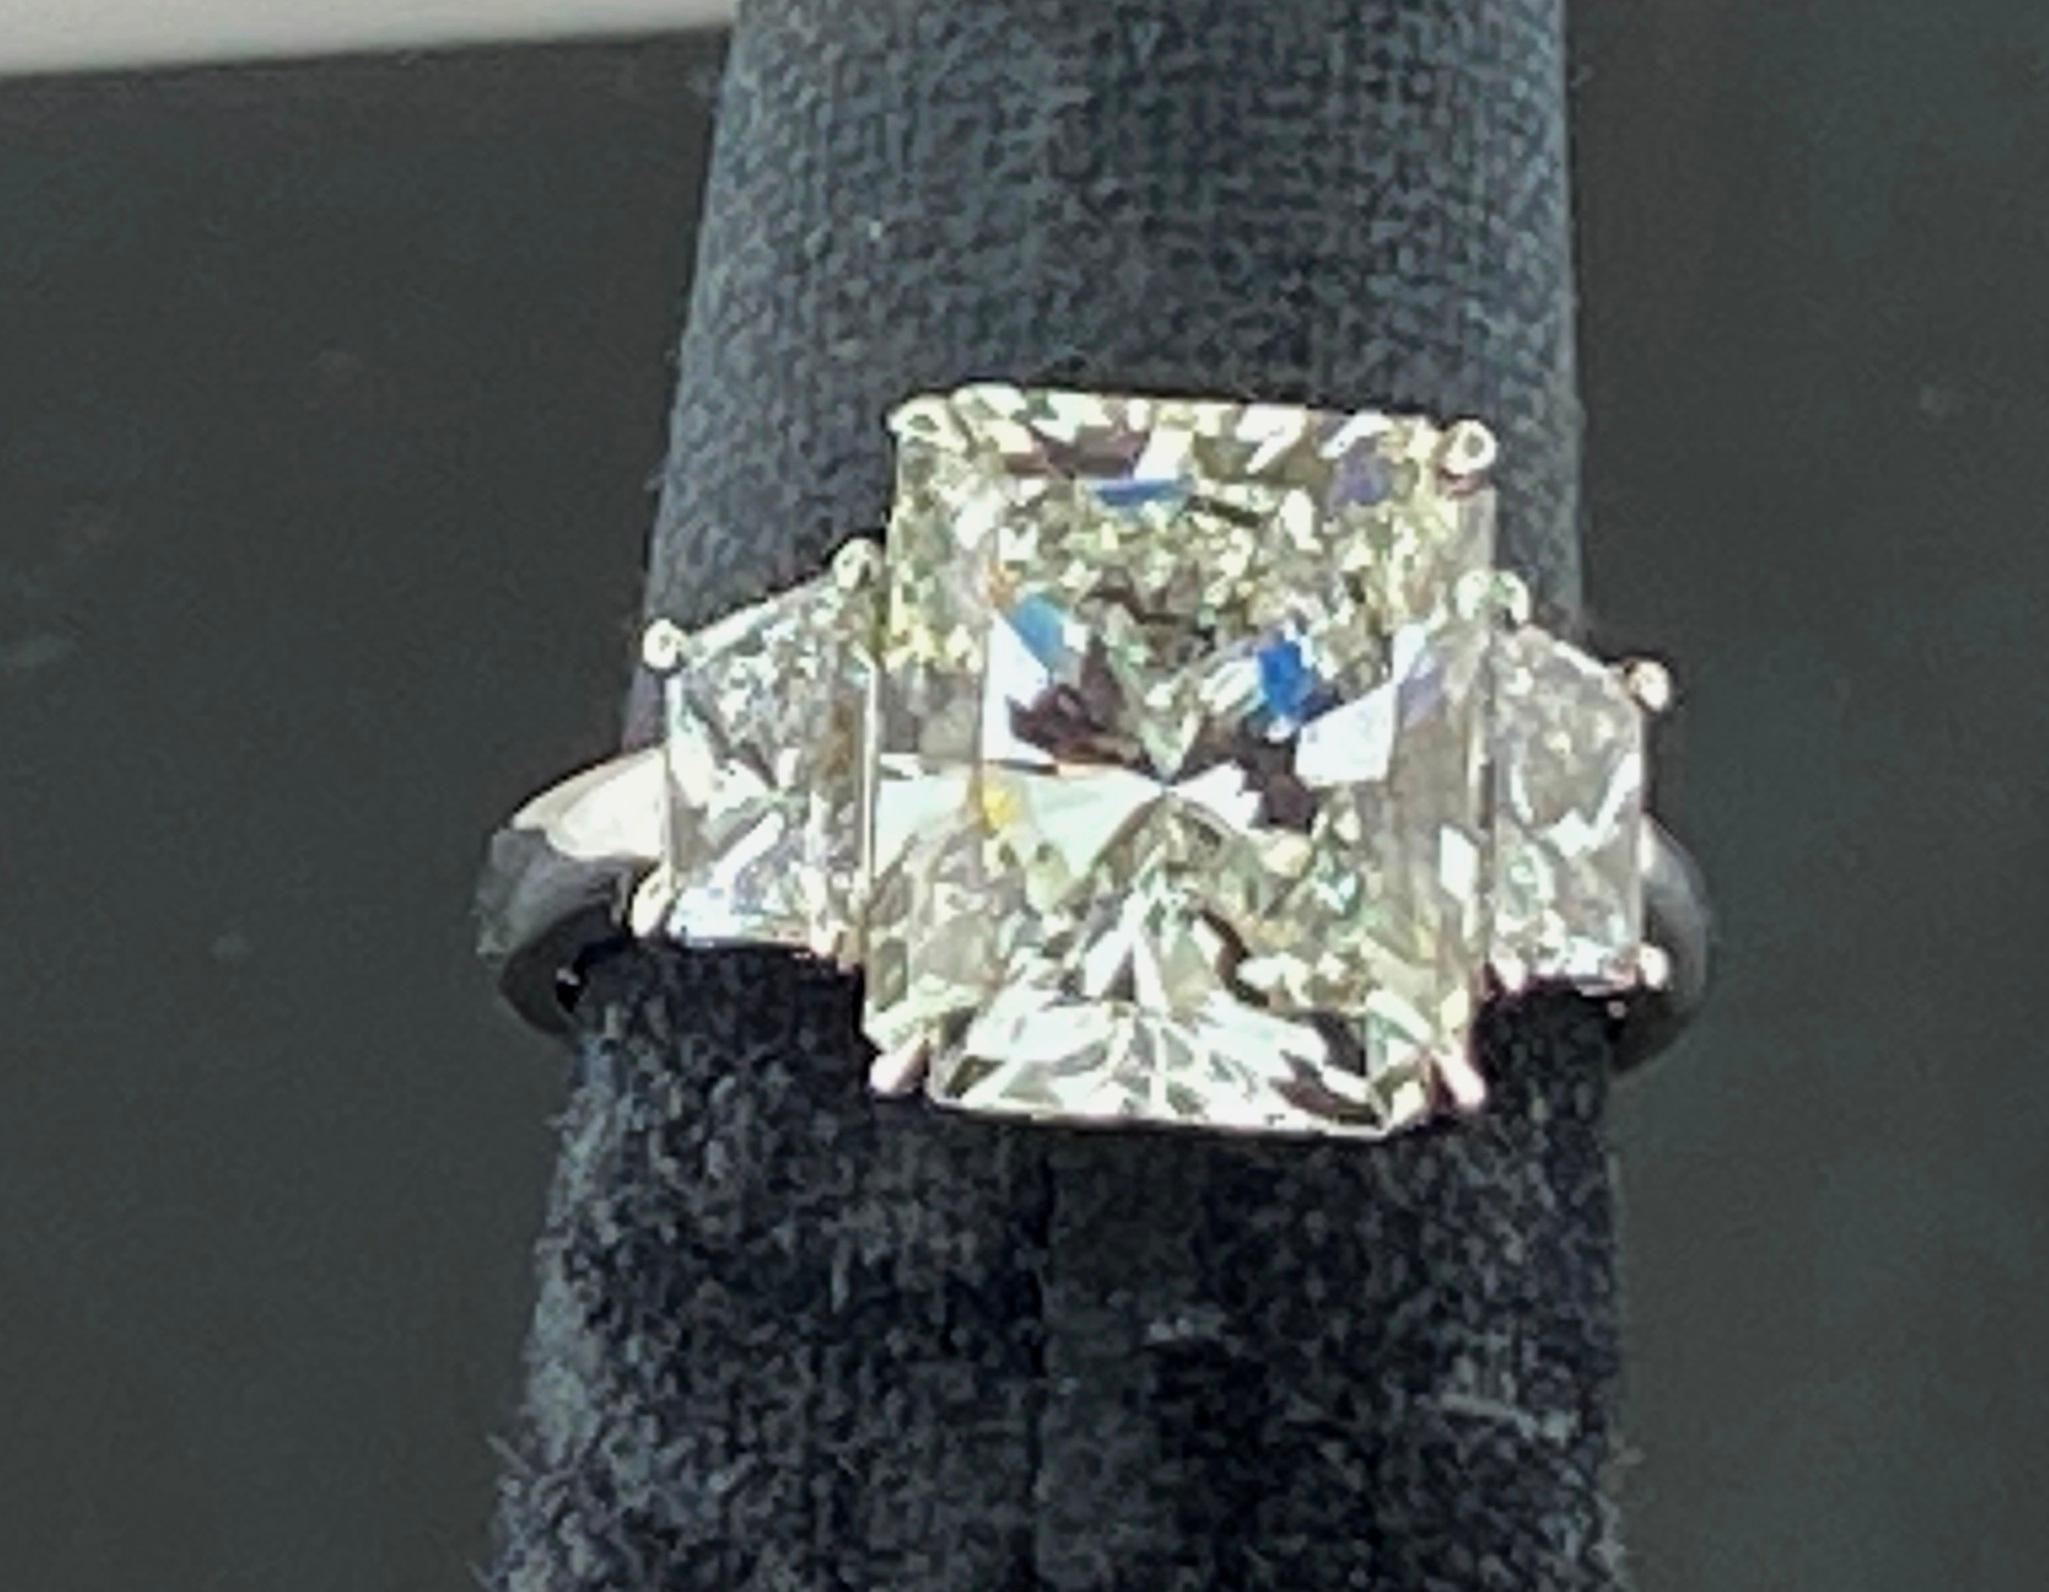 5.07ct Round Brilliant Cut Diamond Solitaire Engagement Ring